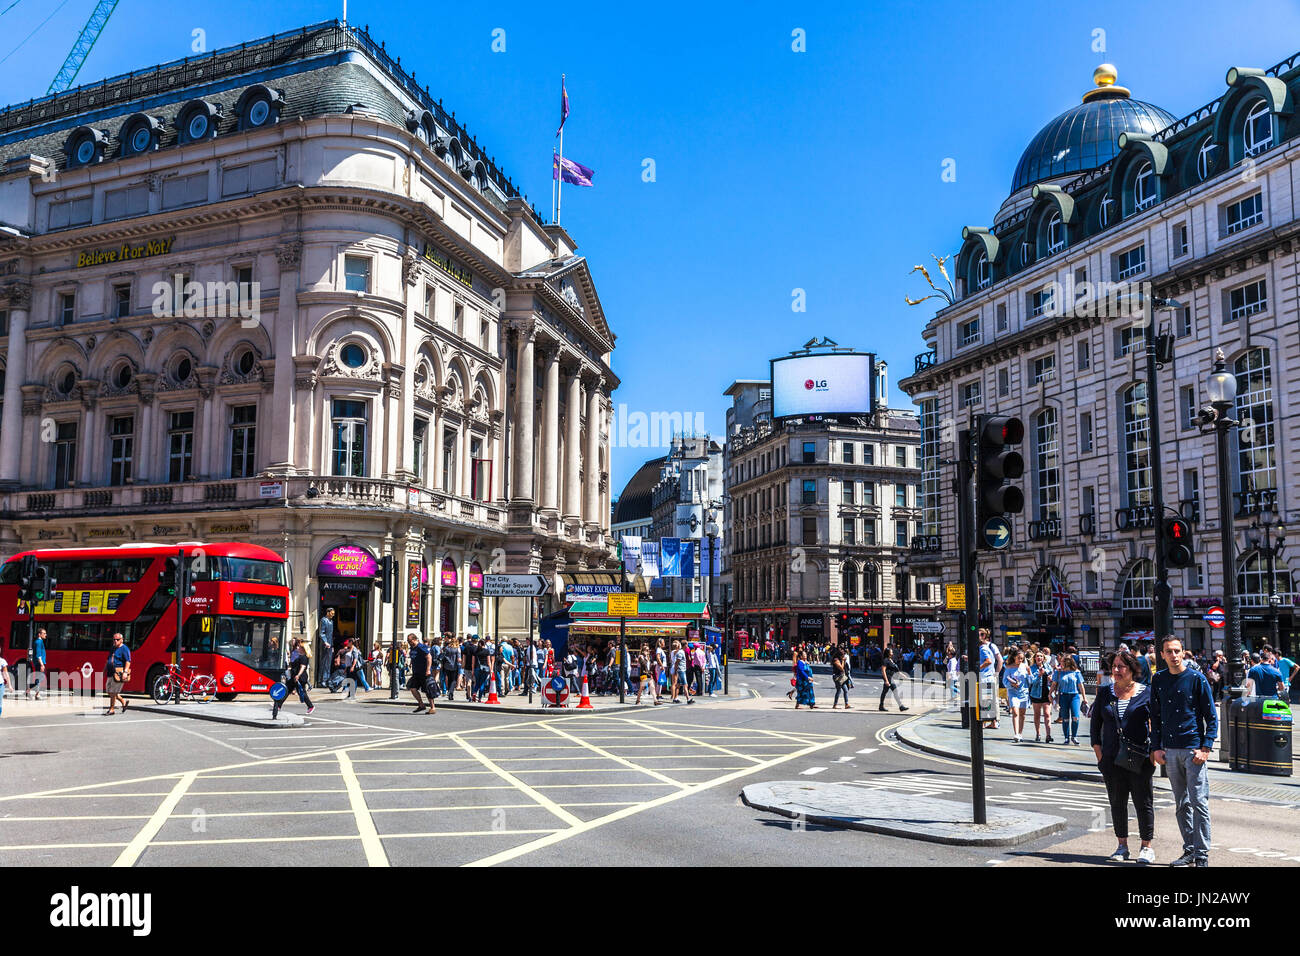 Piccadilly Circus street scene, London, England, UK. Stock Photo